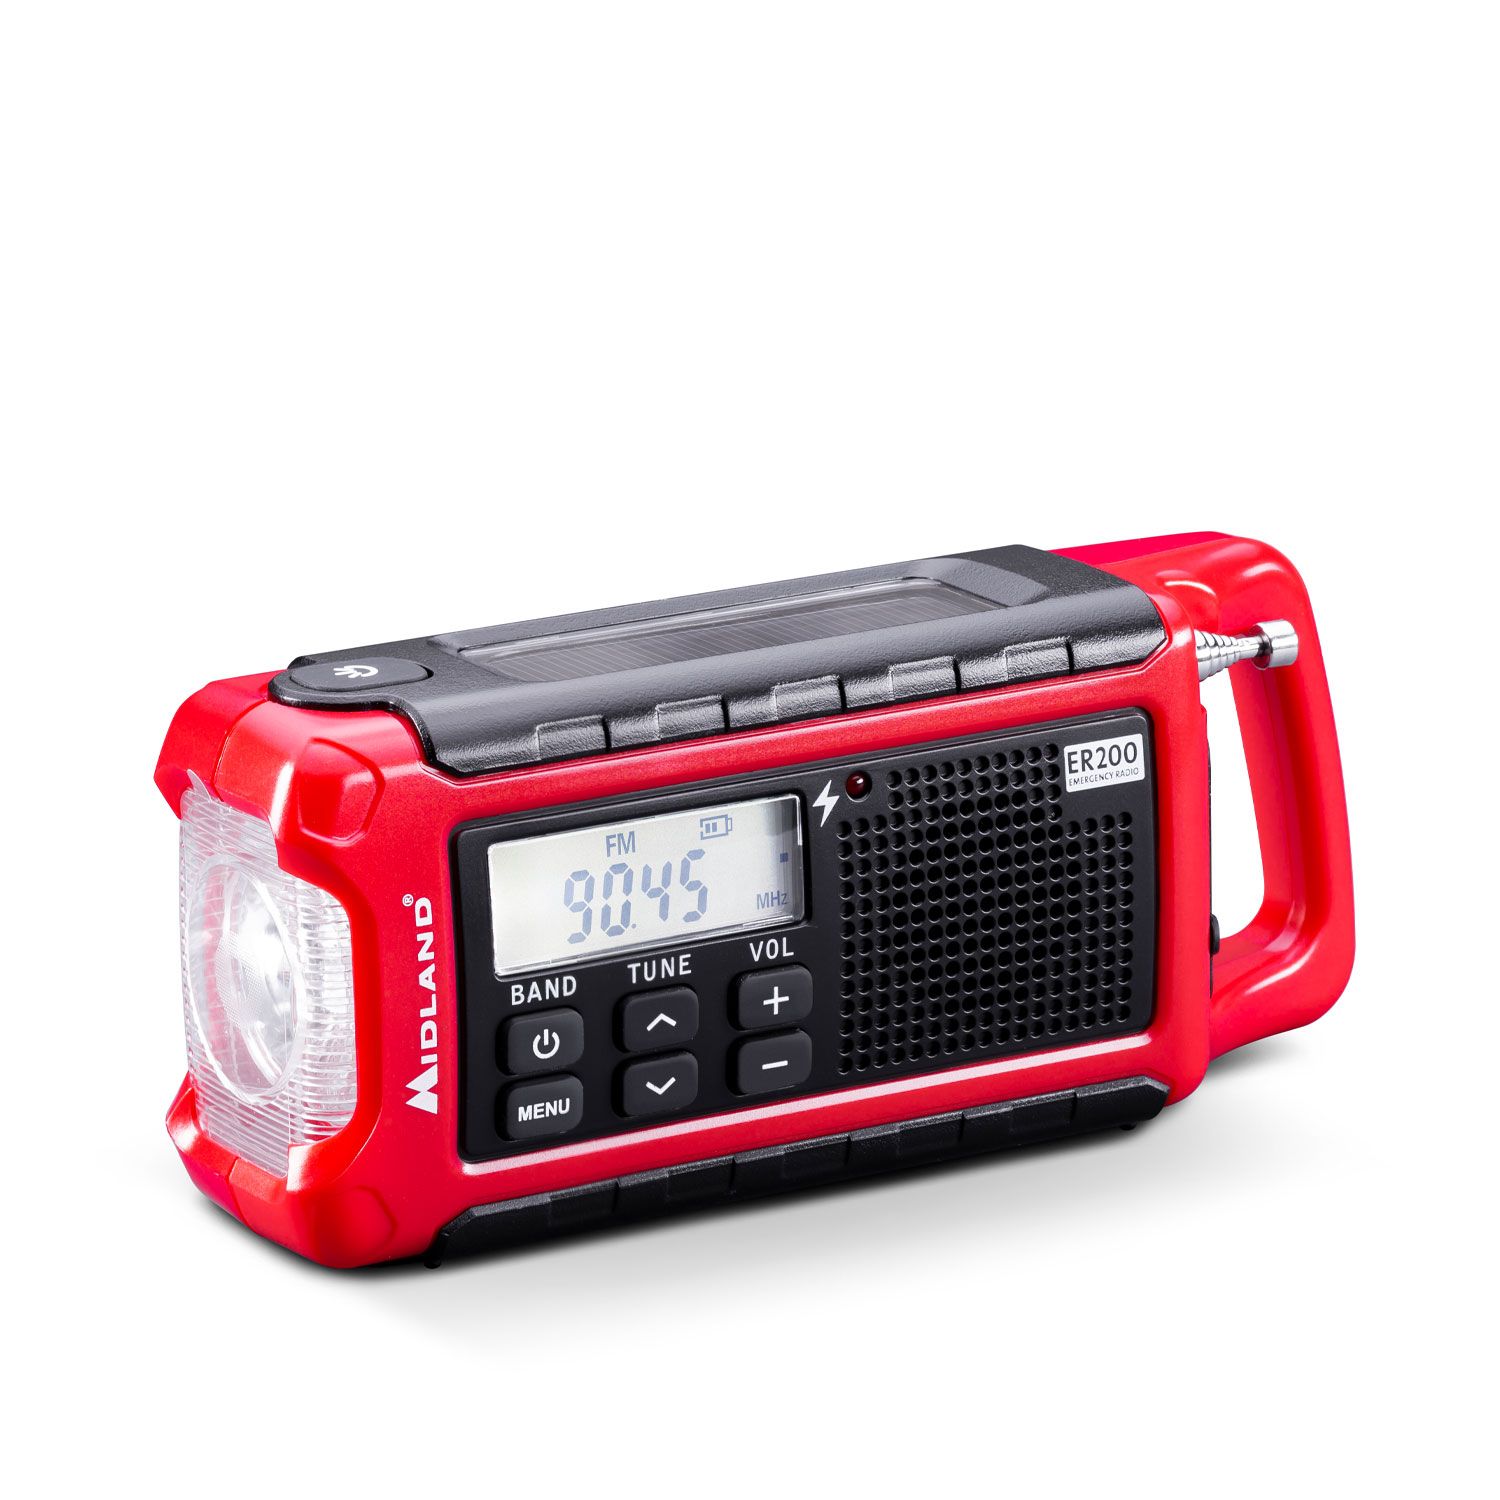 Midland ER200 Emergency Radio 